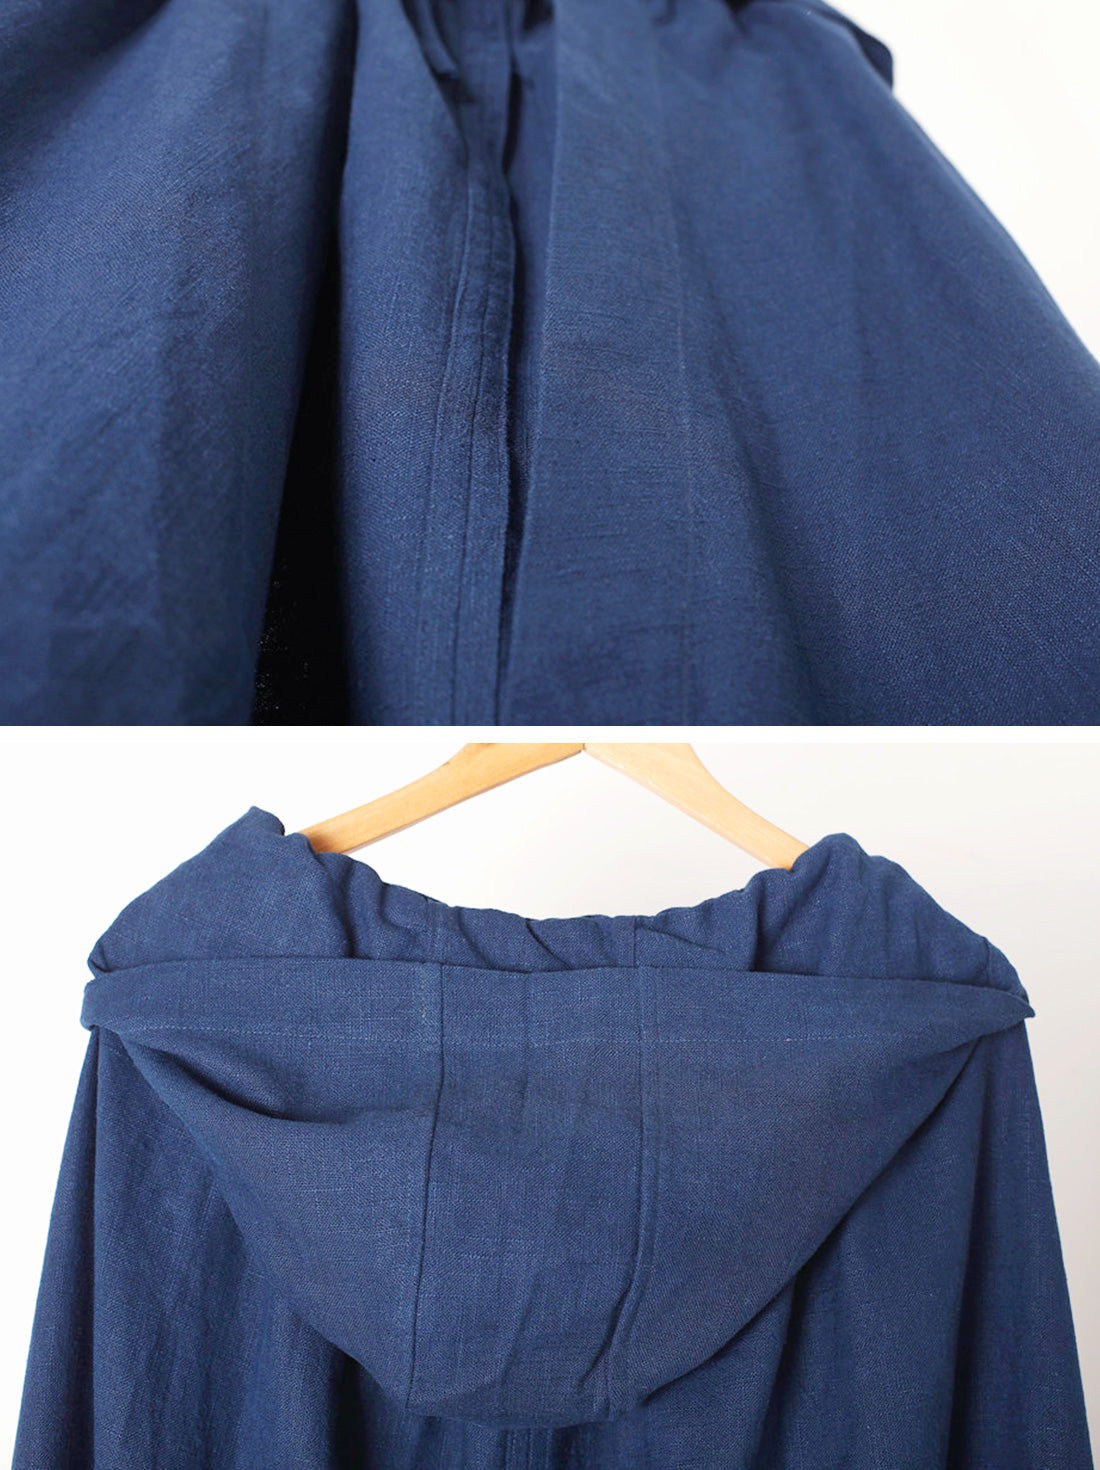 Solid Color Hooded Linen Cape Coat Details 2